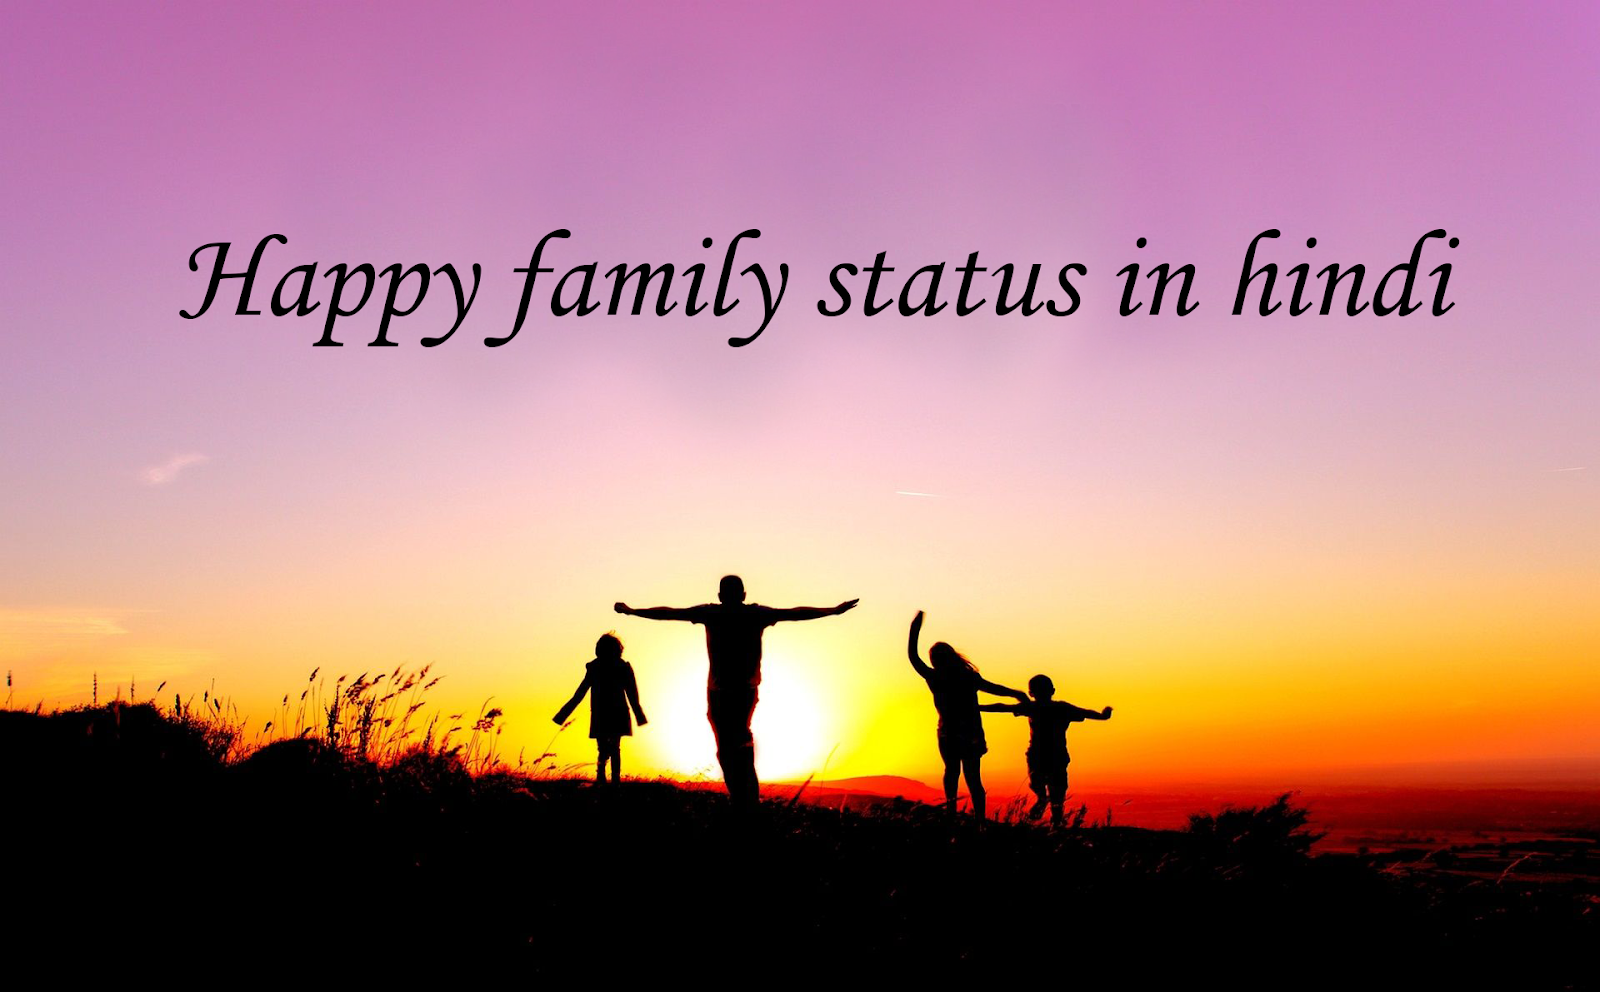 Happy family status in hindi